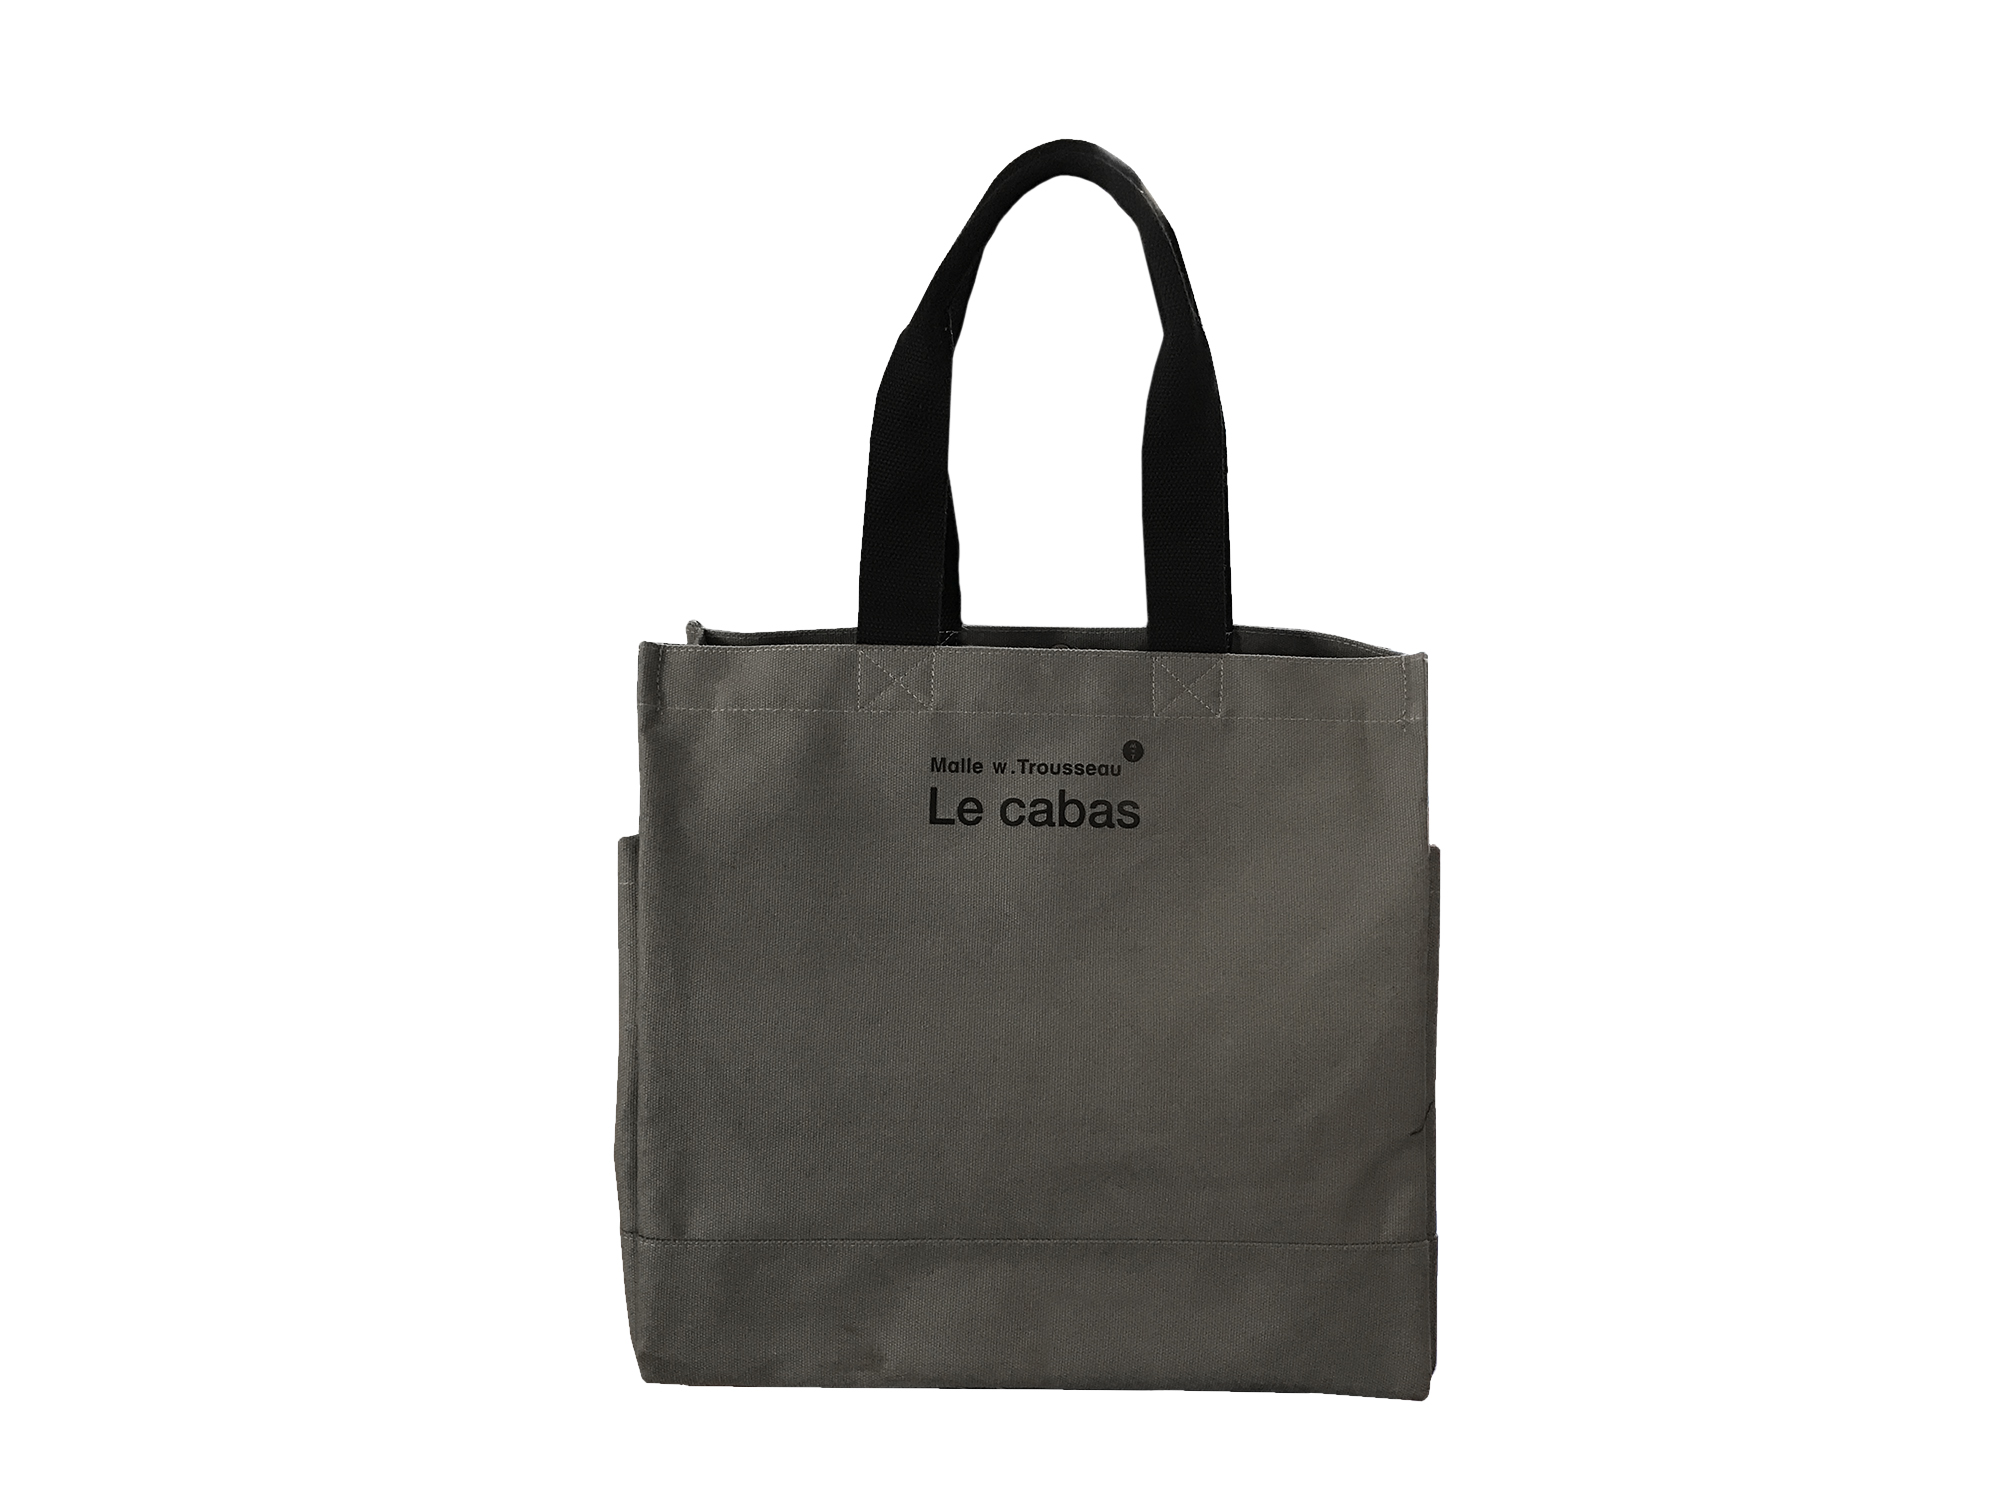 The shopping bag - Malle w. Trousseau